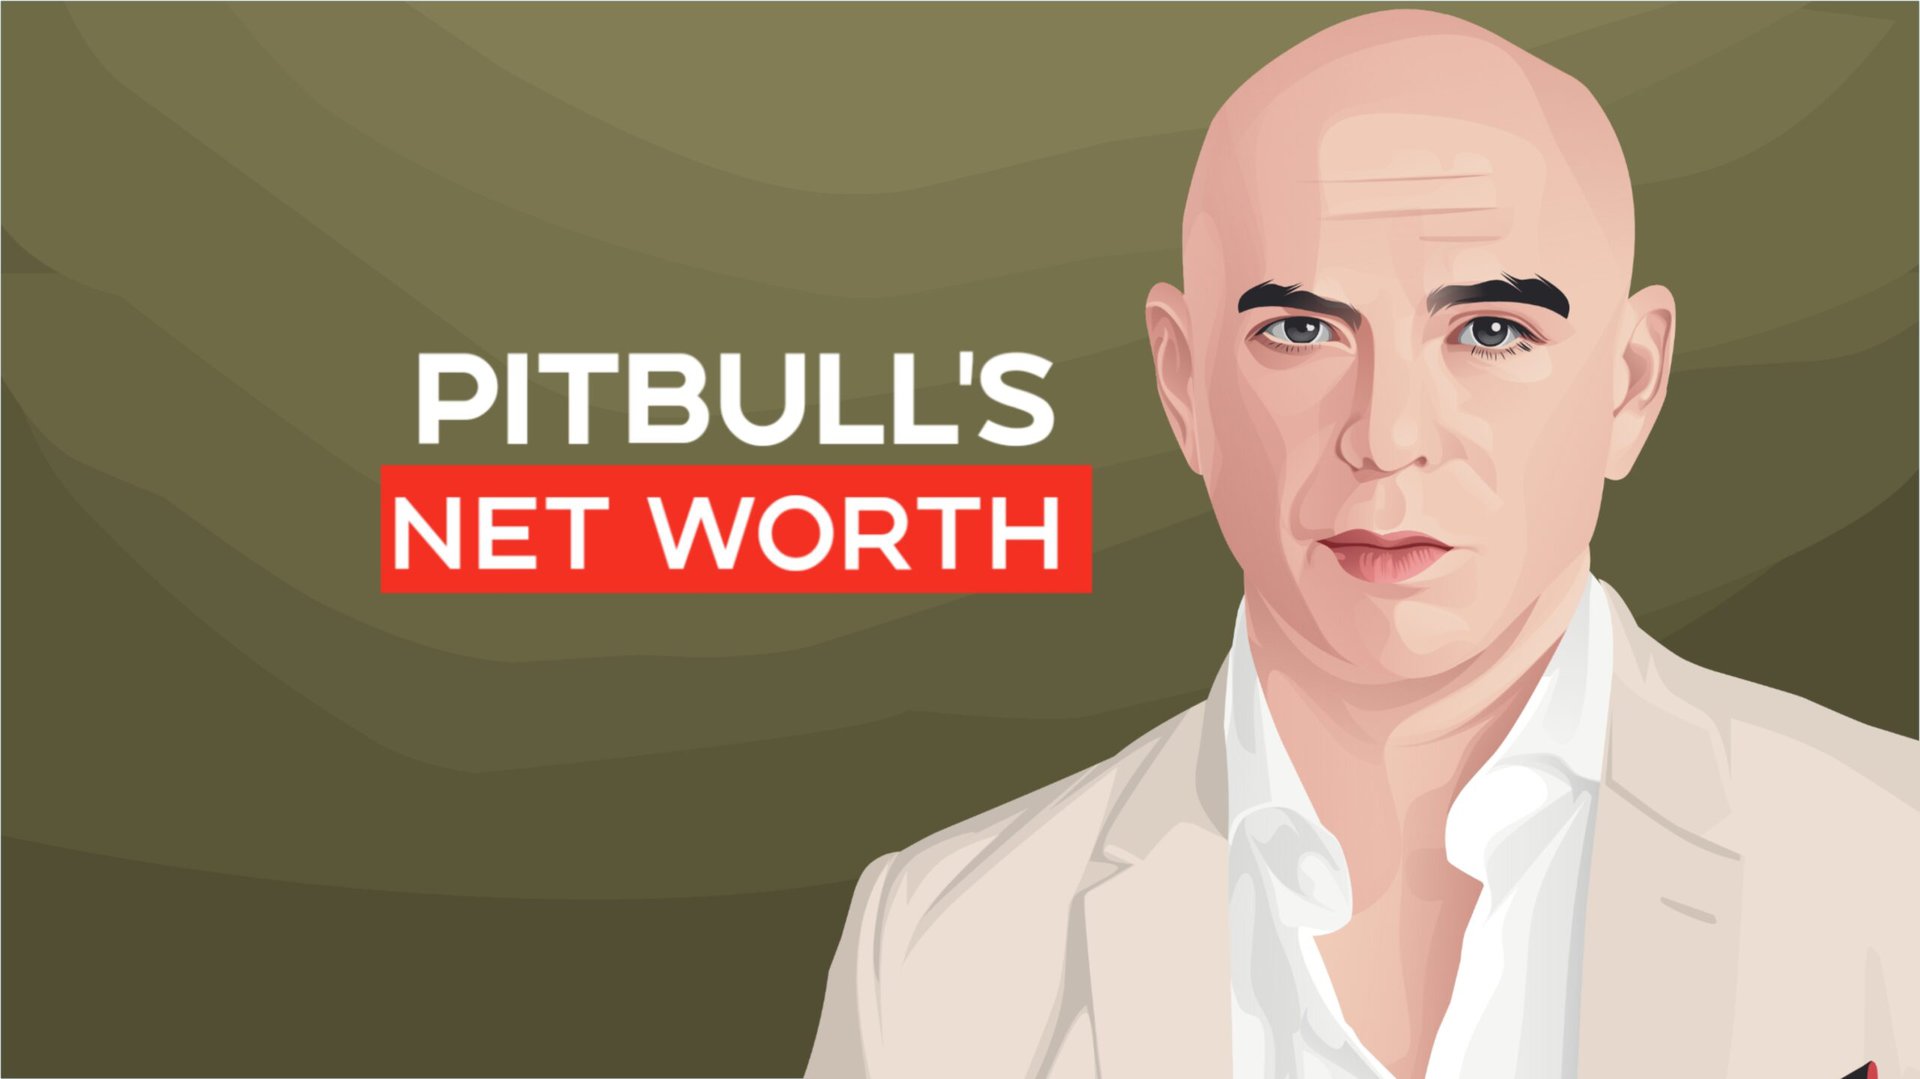 Pitbull's net worth